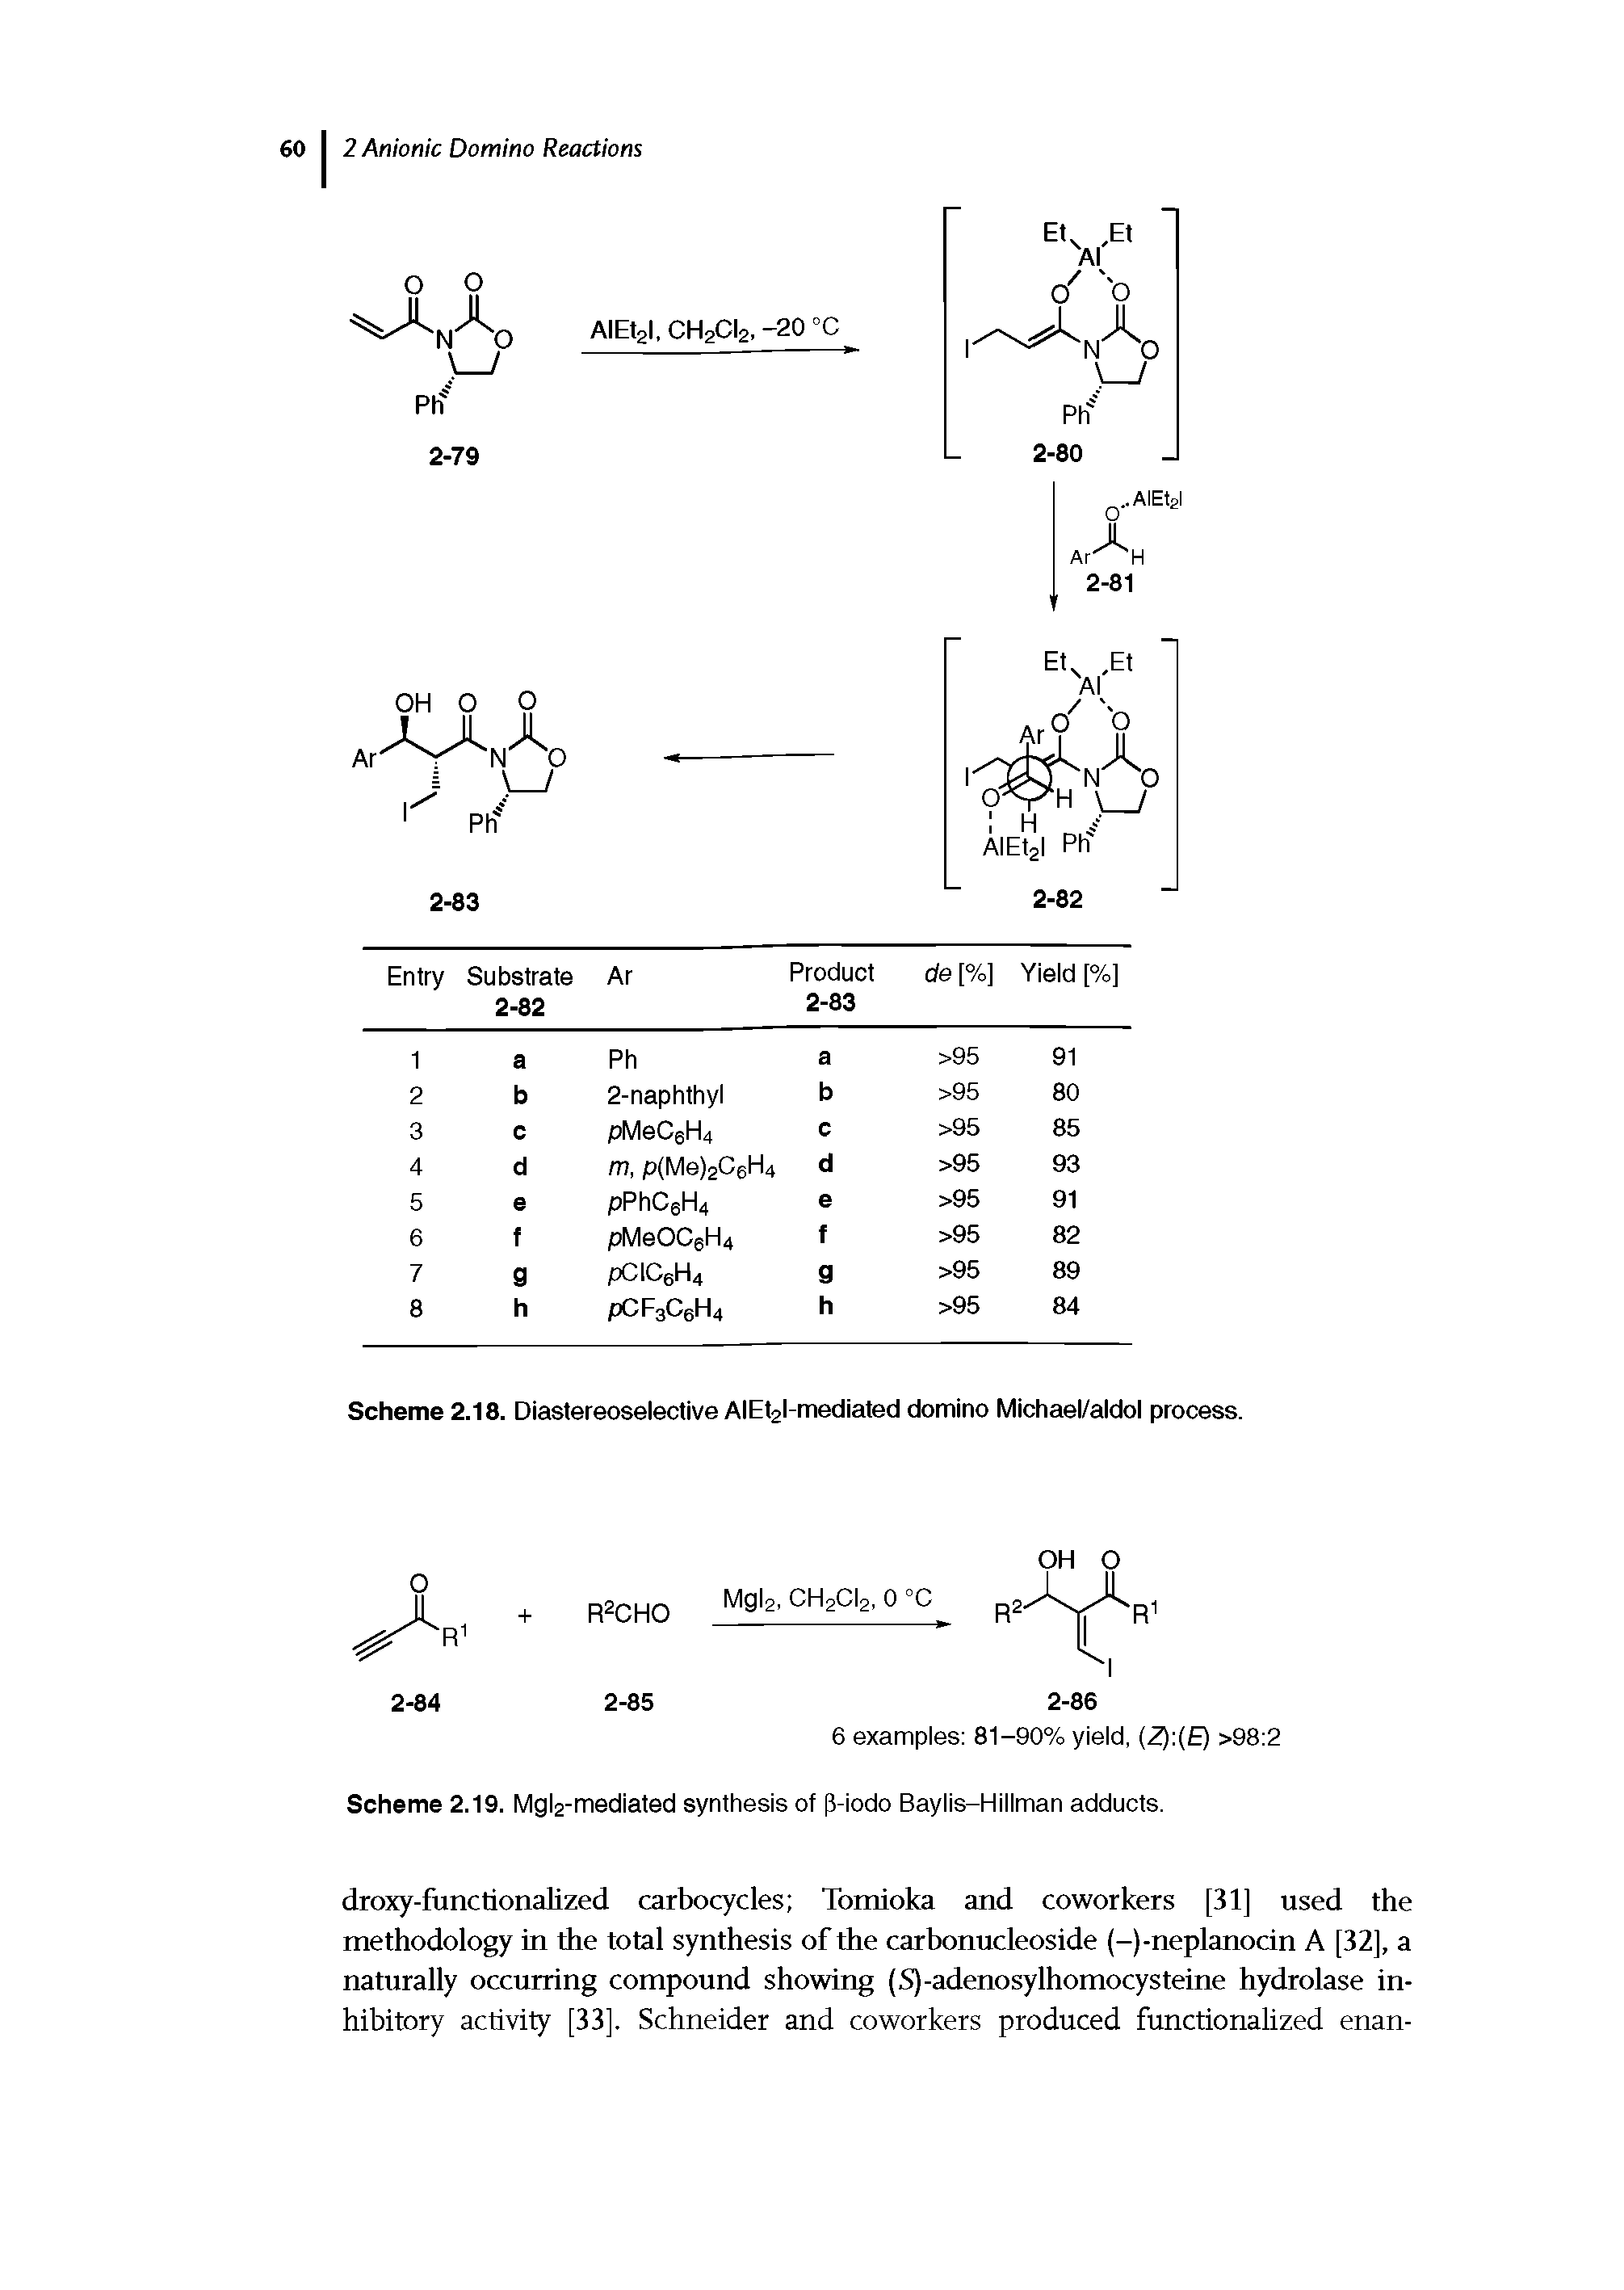 Scheme 2.19. Mgl2-mediated synthesis of (3-iodo Baylis-Hillman adducts.